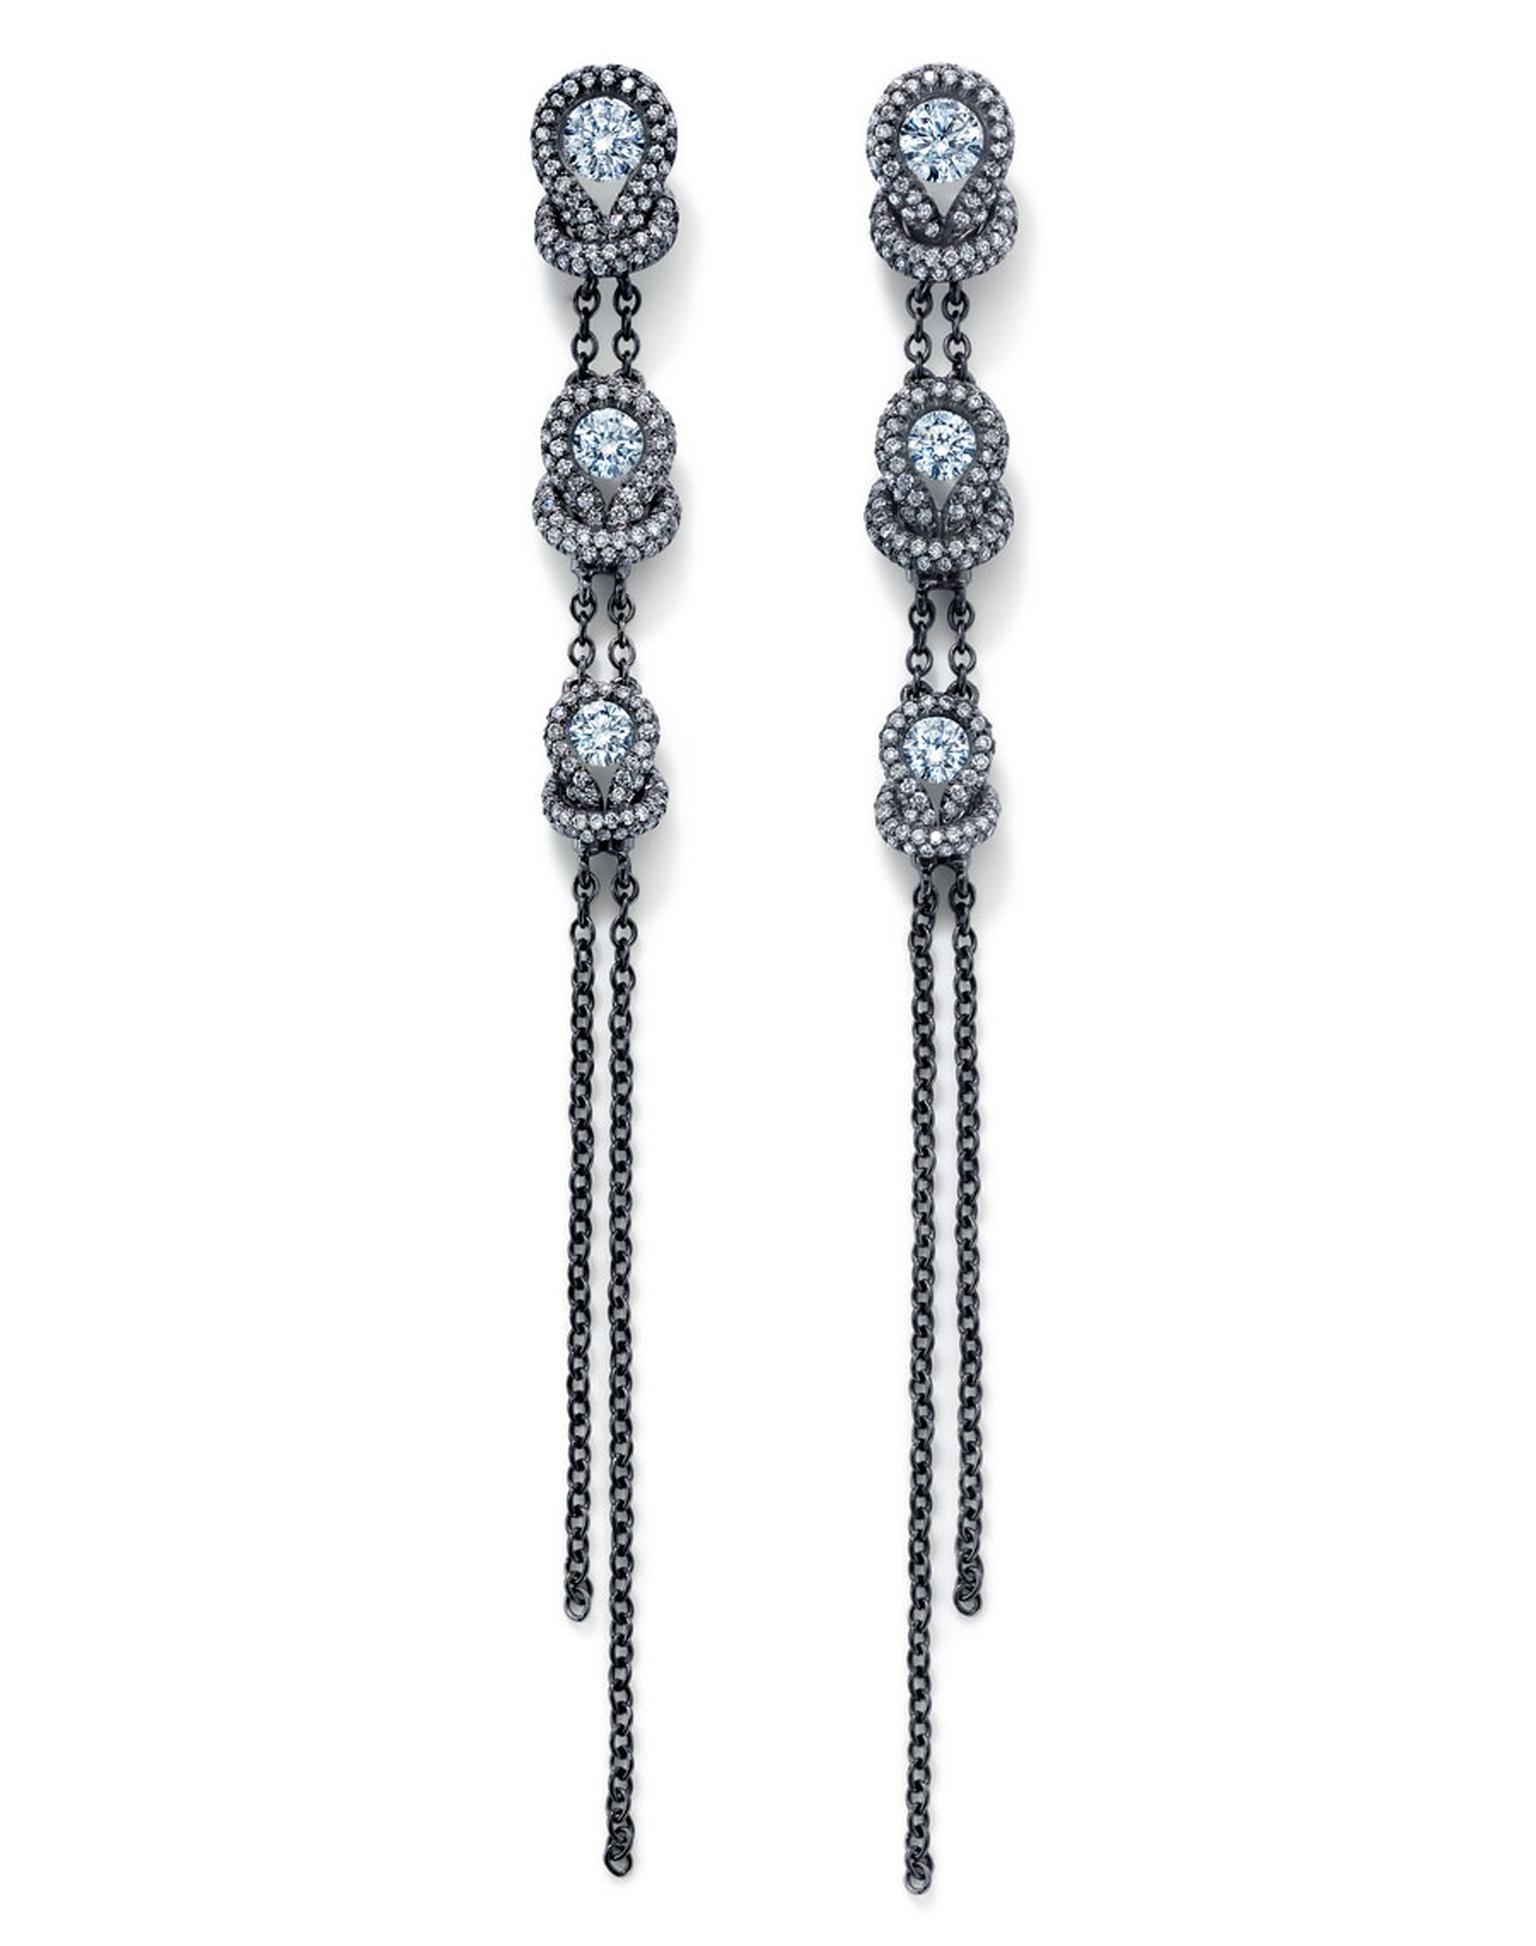 Norah-Jones-wore-Forevermark-Encordia-earrings